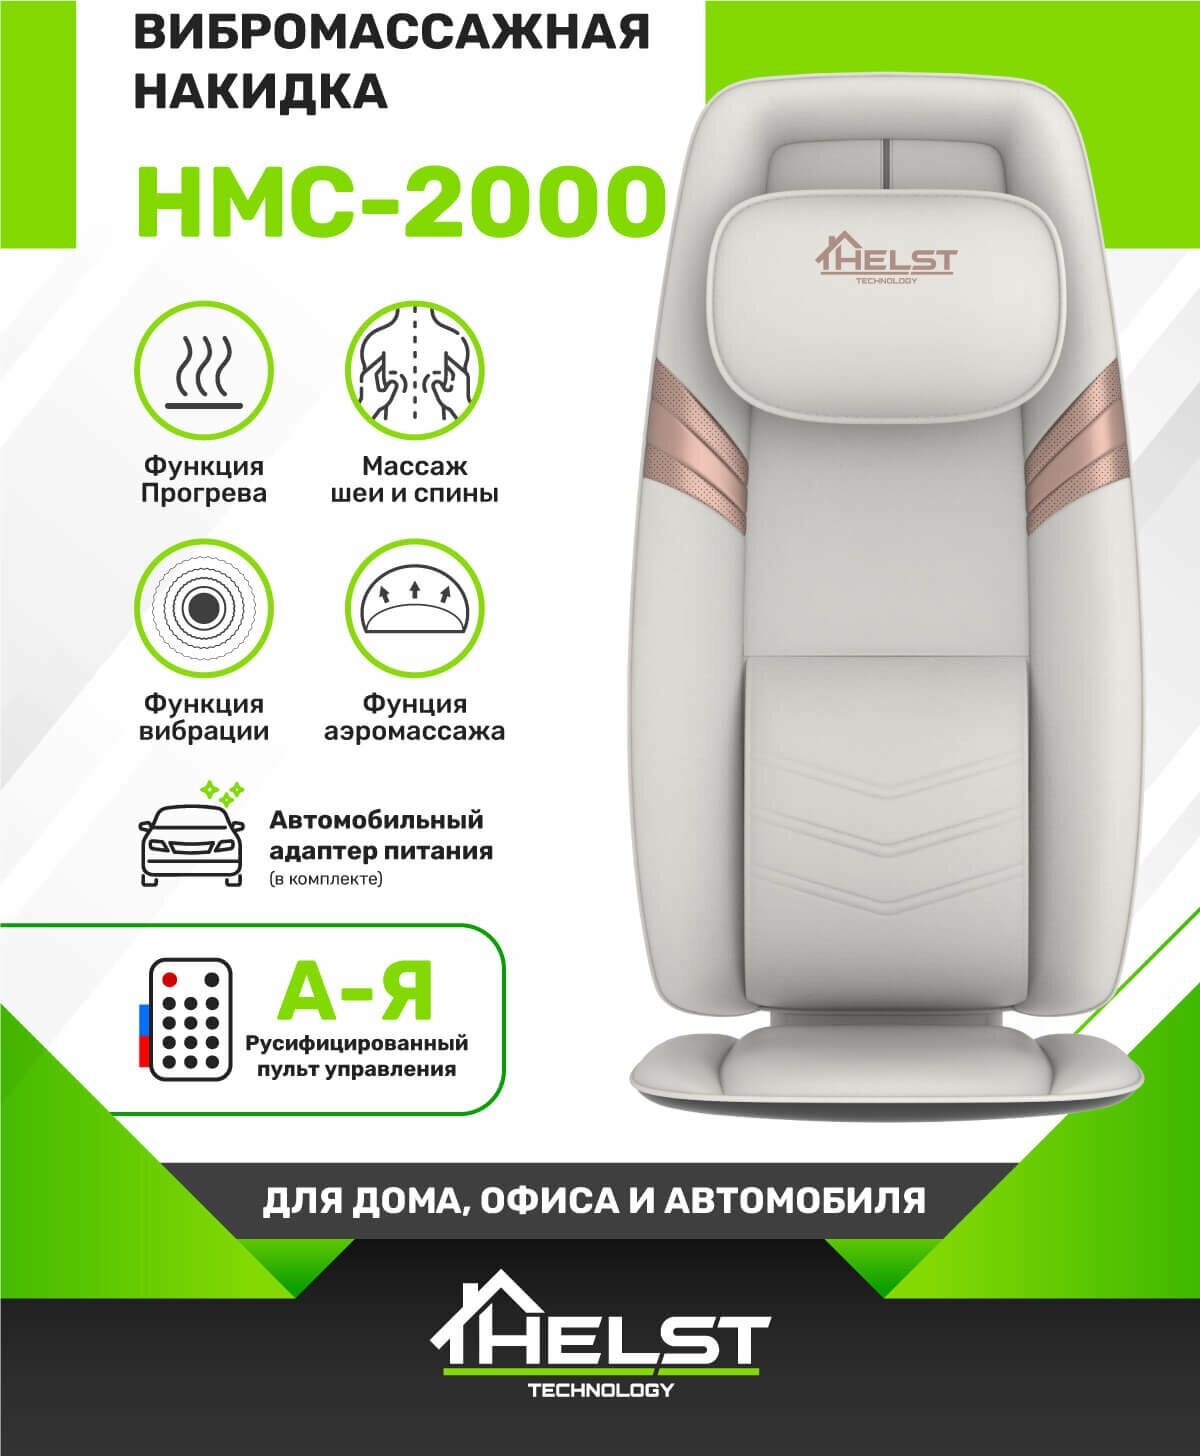 Массажная накидка HELST HMC-2000